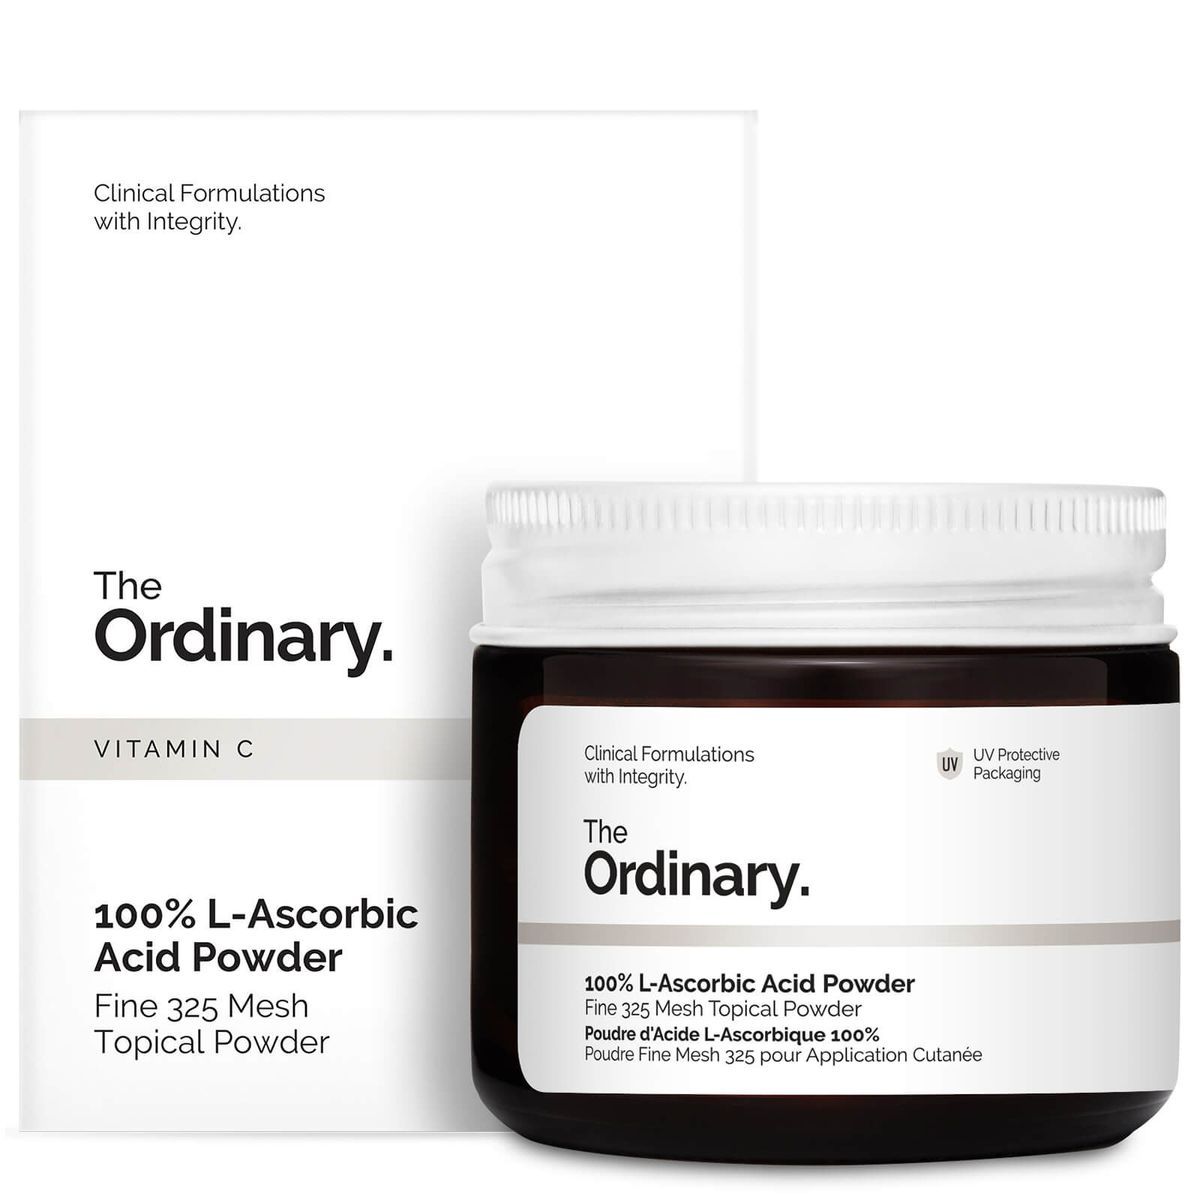 The Ordinary - 100% L-Ascorbic Acid Powder 20g